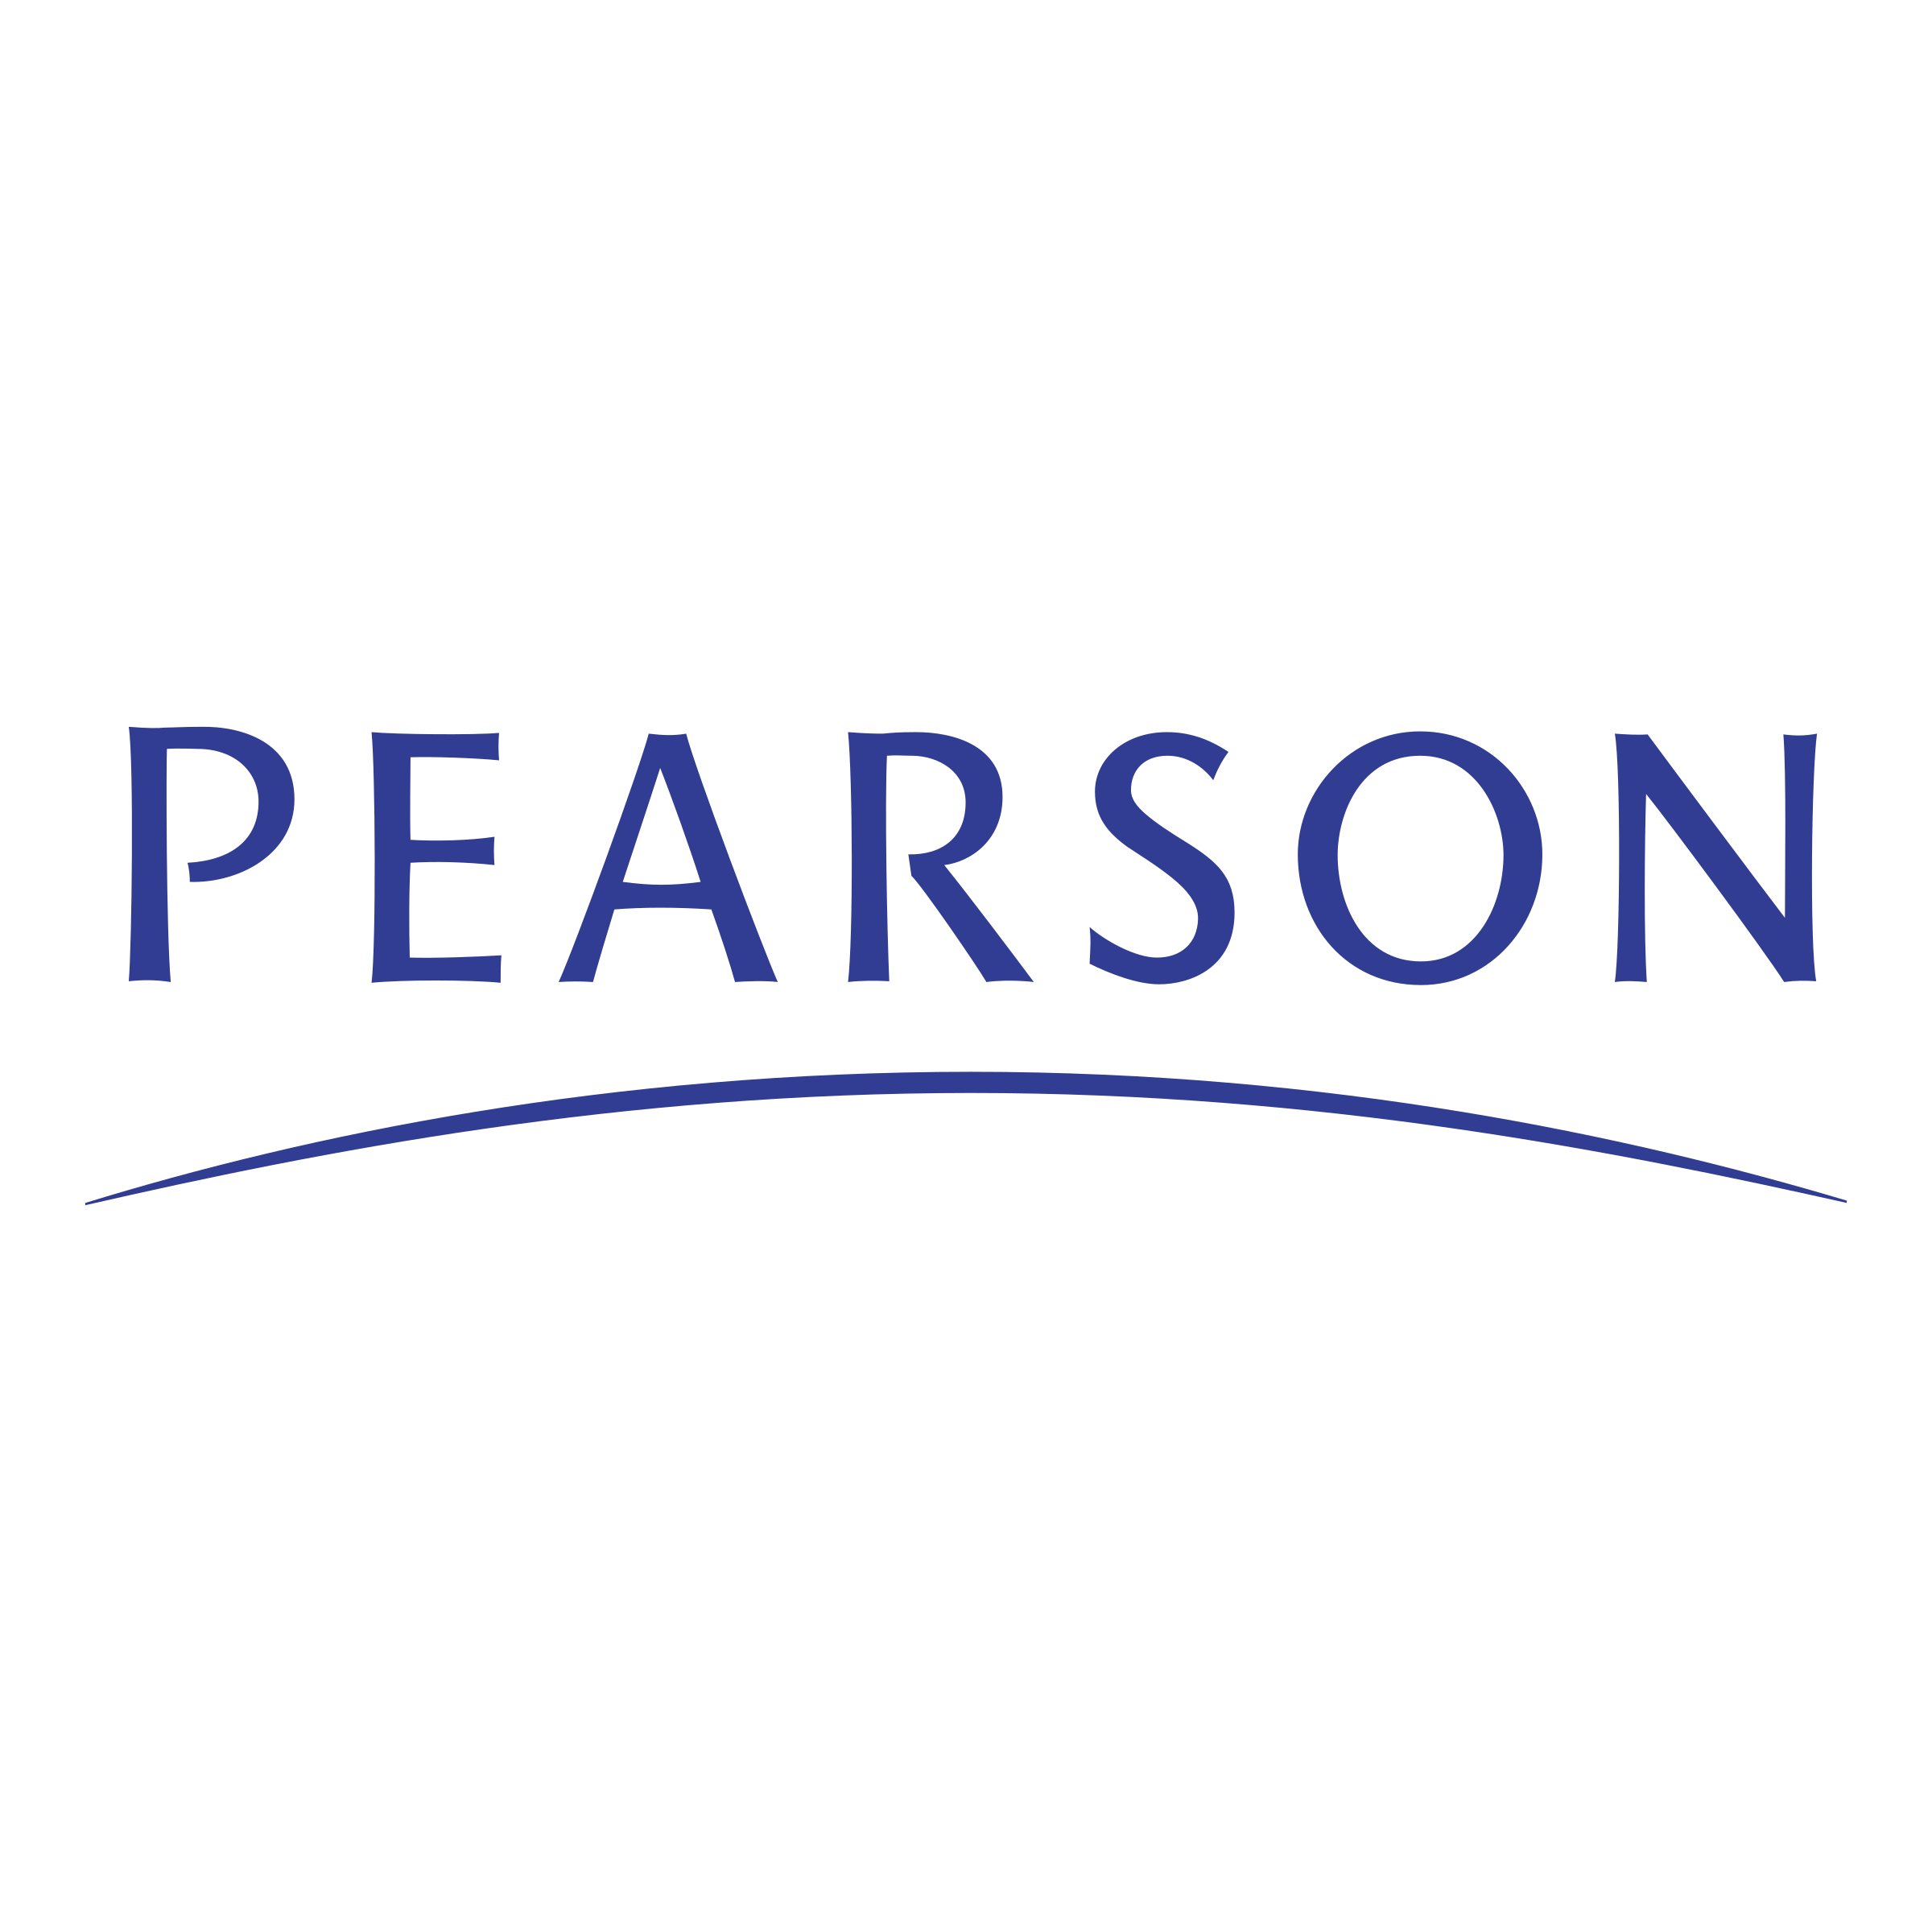 Pearson Logo - Pearson Logo PNG Transparent & SVG Vector